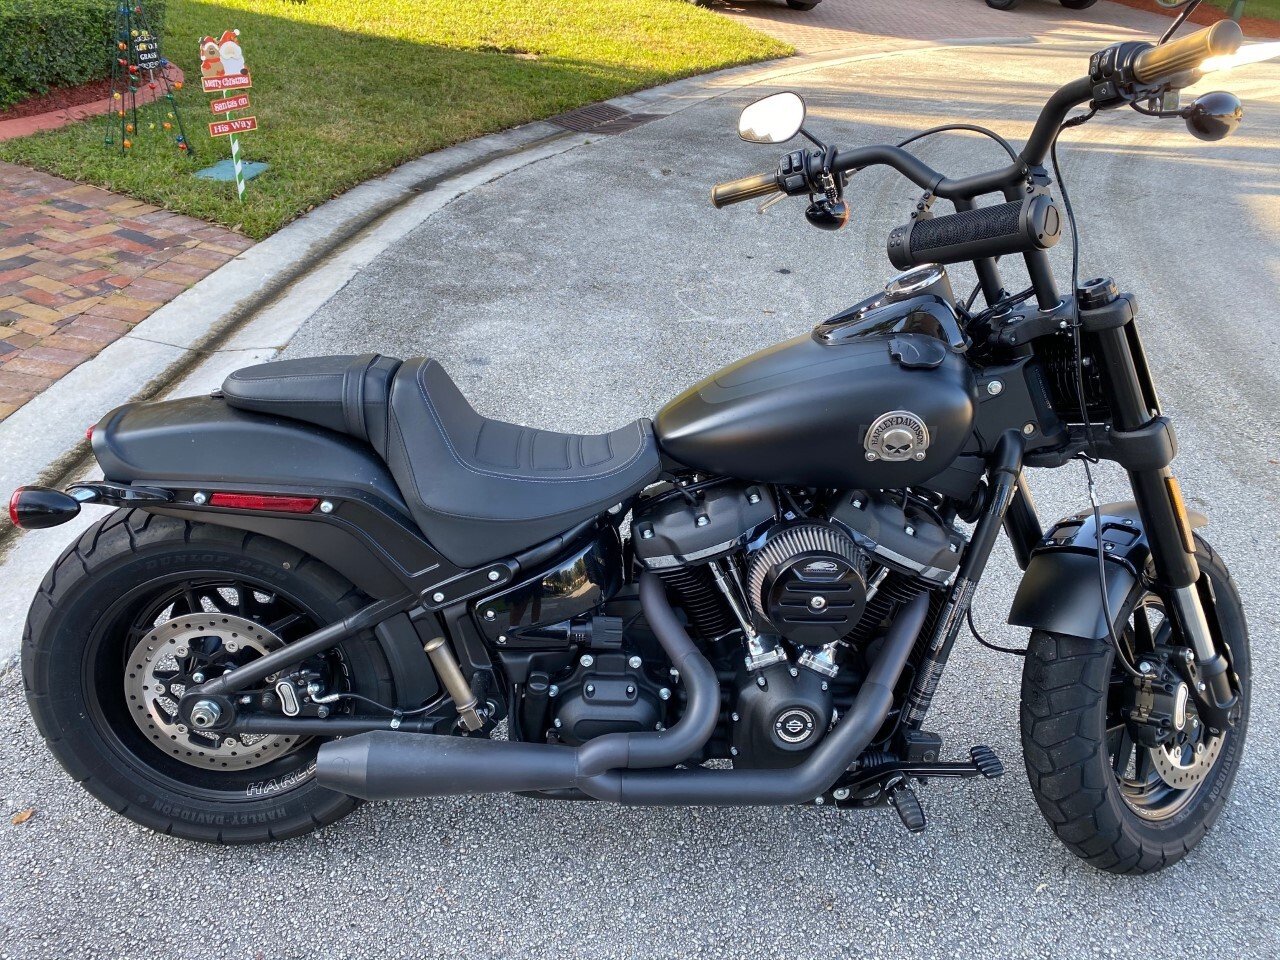 2018 Harley Davidson Softail Fat Bob For Sale Near Miramar Florida 33029 Motorcycles On Autotrader